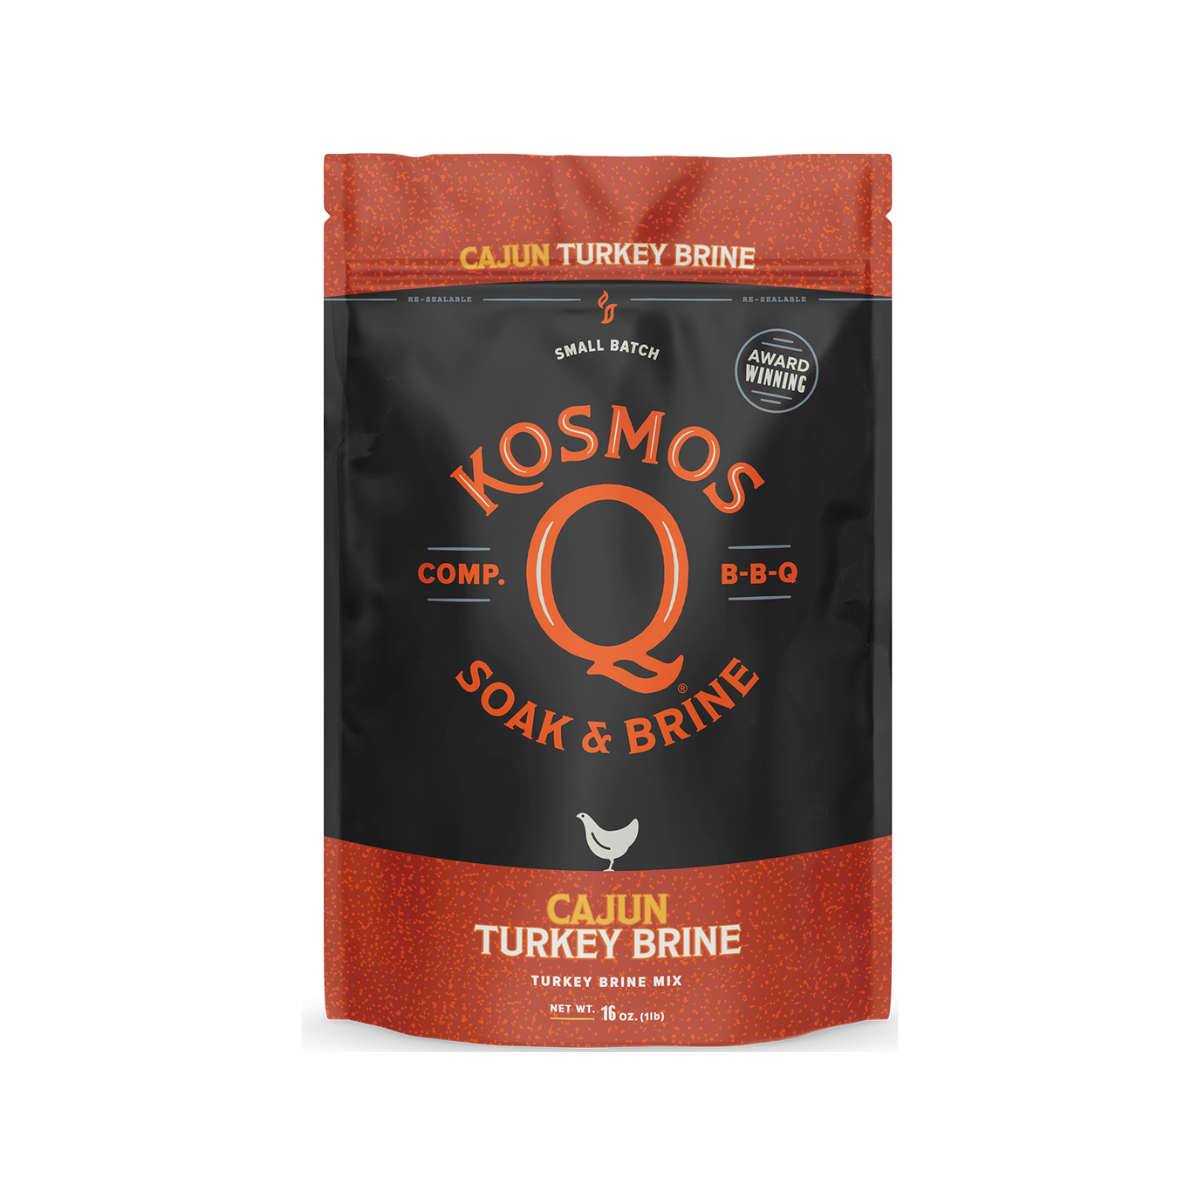 Kosmos Q 12-Inch Meat Slicer